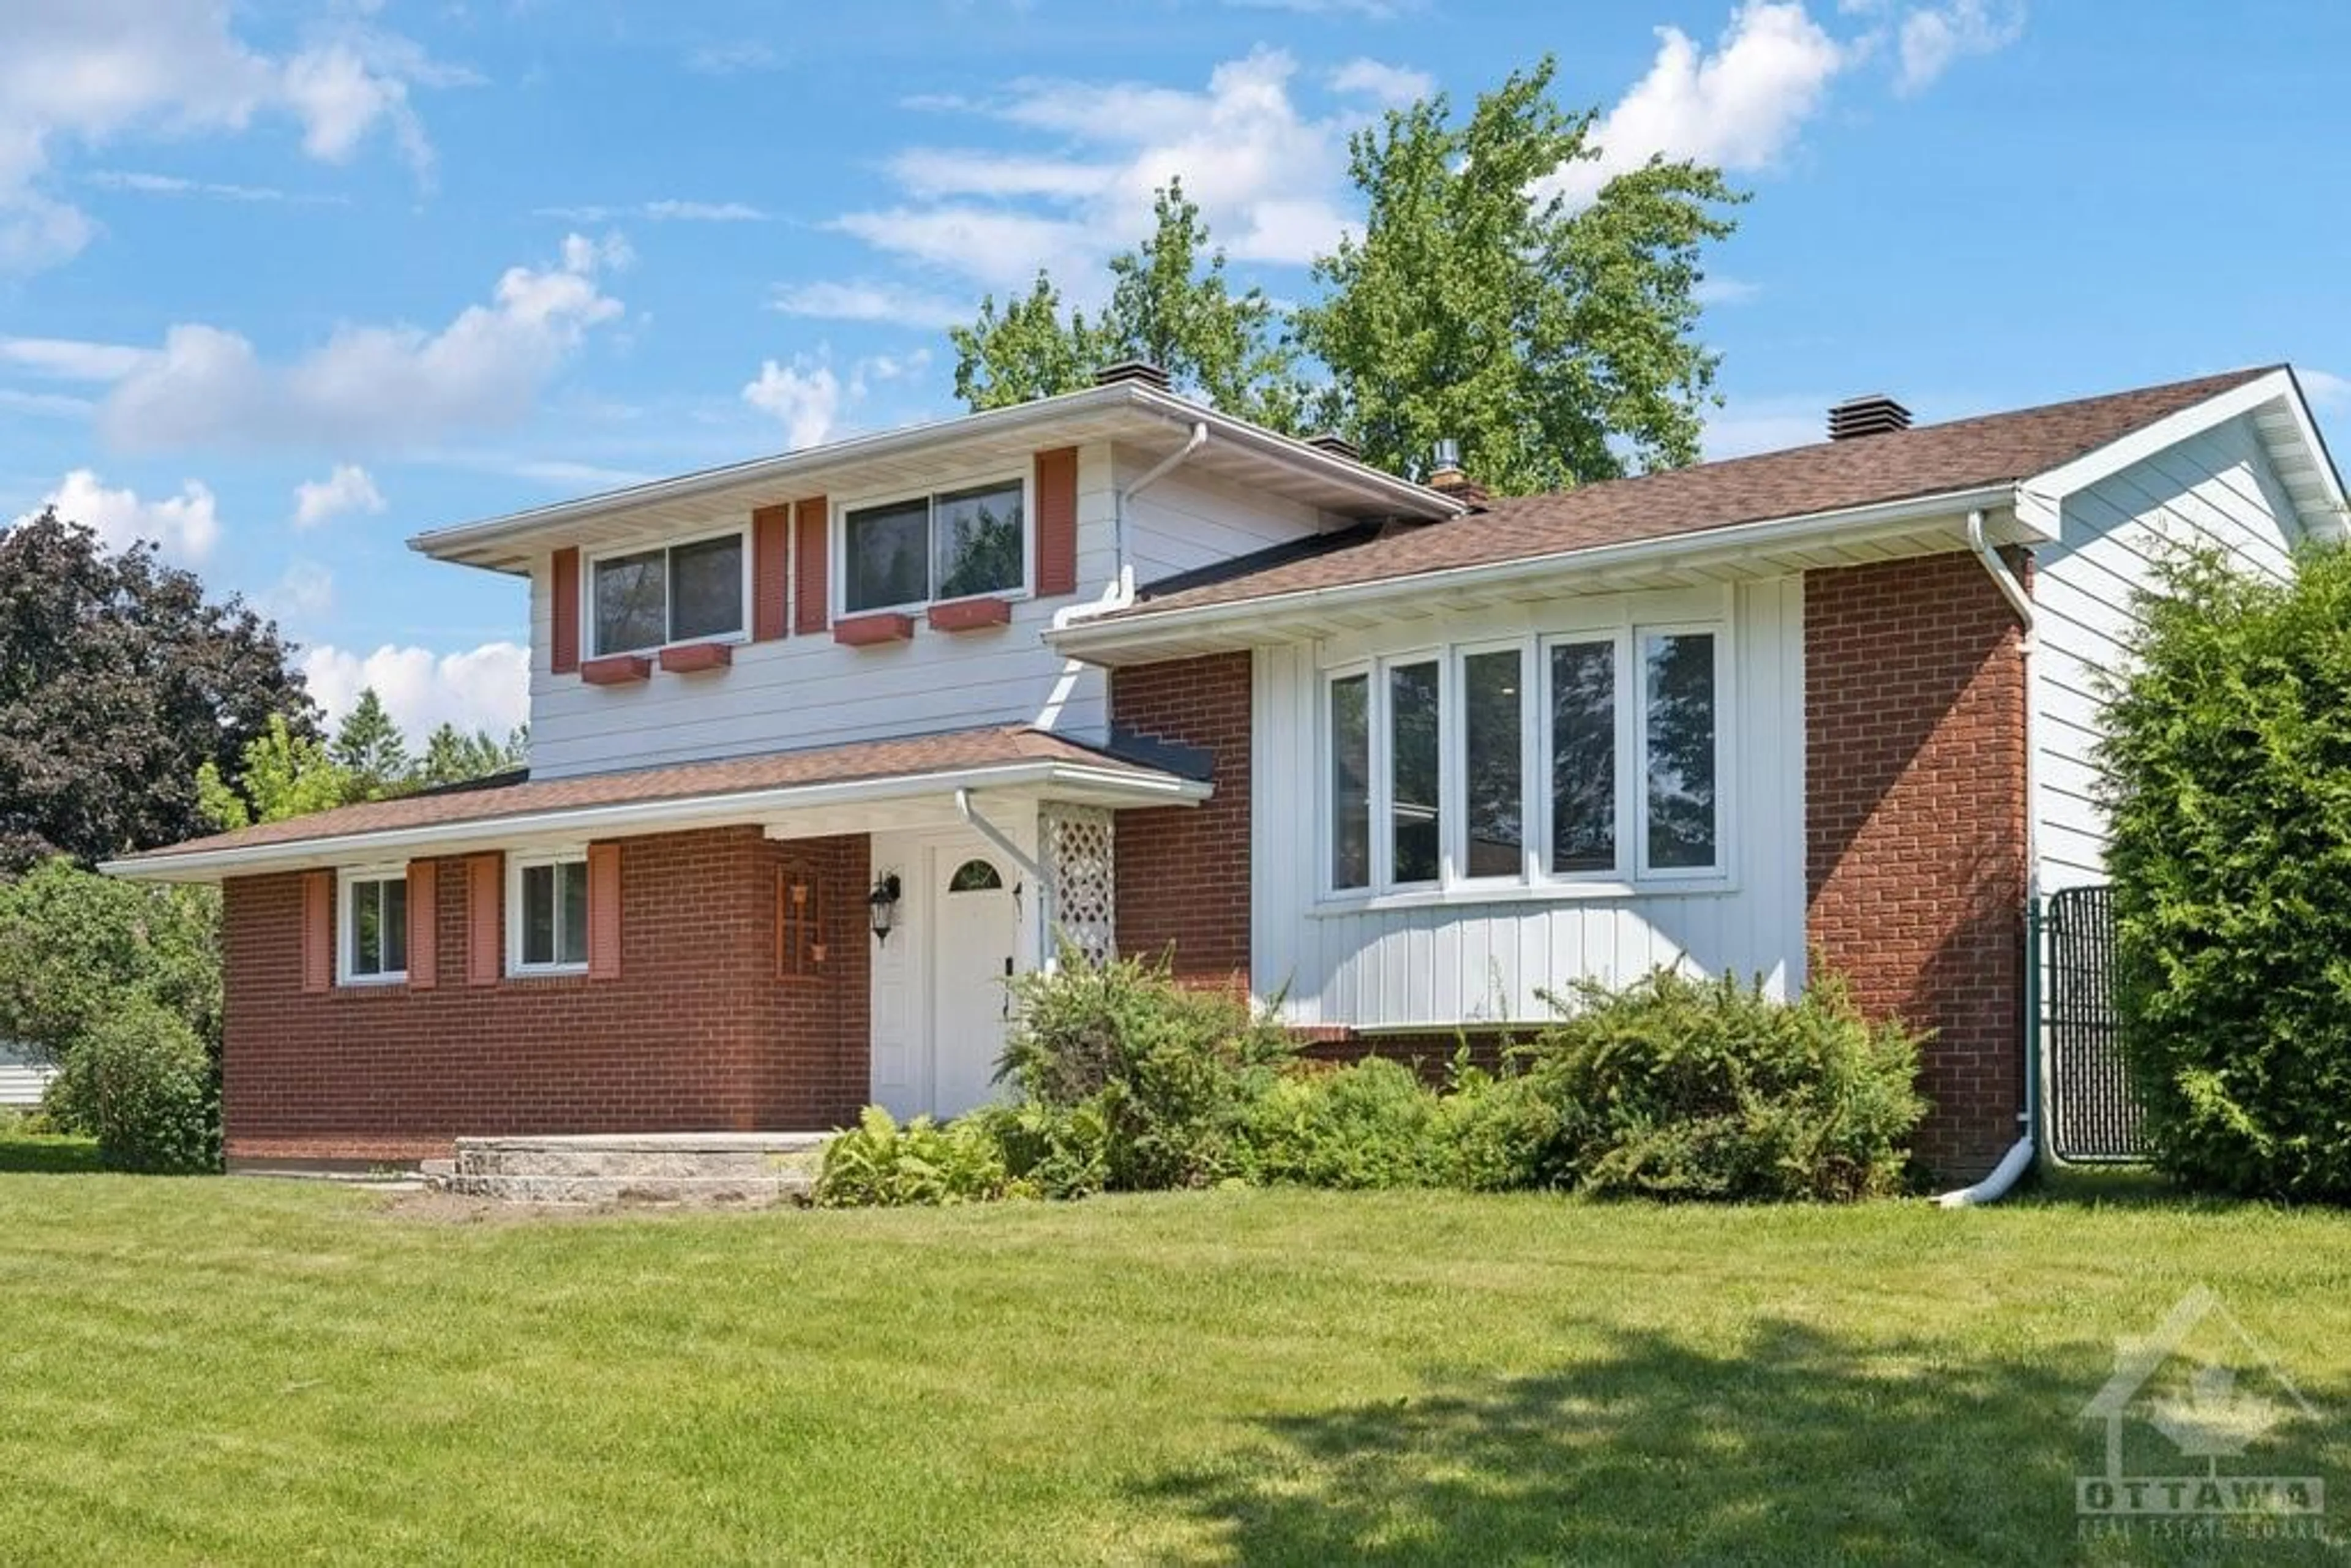 Home with brick exterior material for 13 RIDGEBURN Gate, Ottawa Ontario K1B 4C7